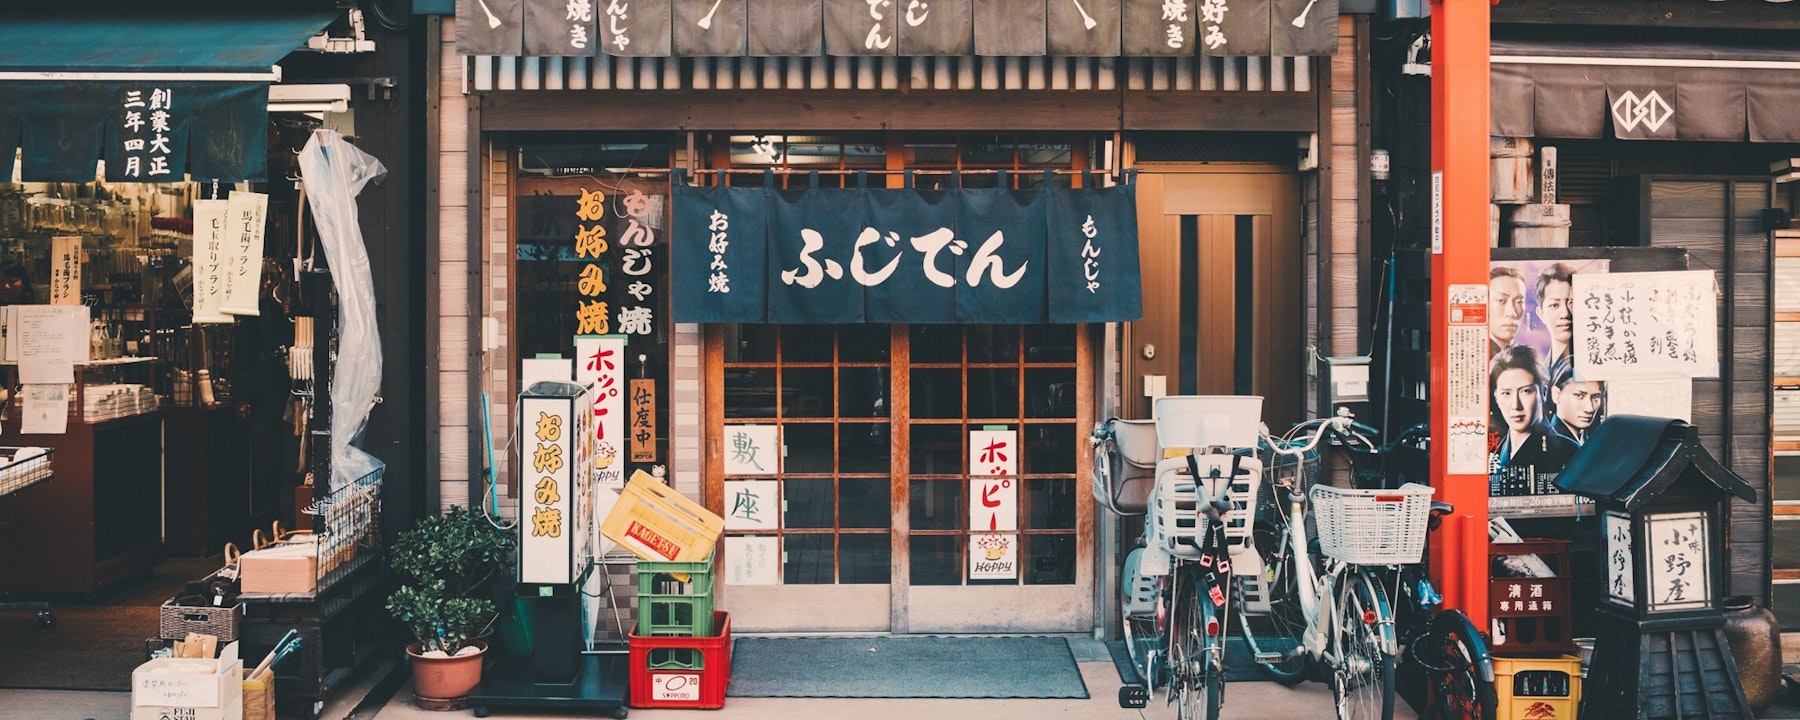 Top 5 Michelin Star Restaurants in Tokyo Black Tomato